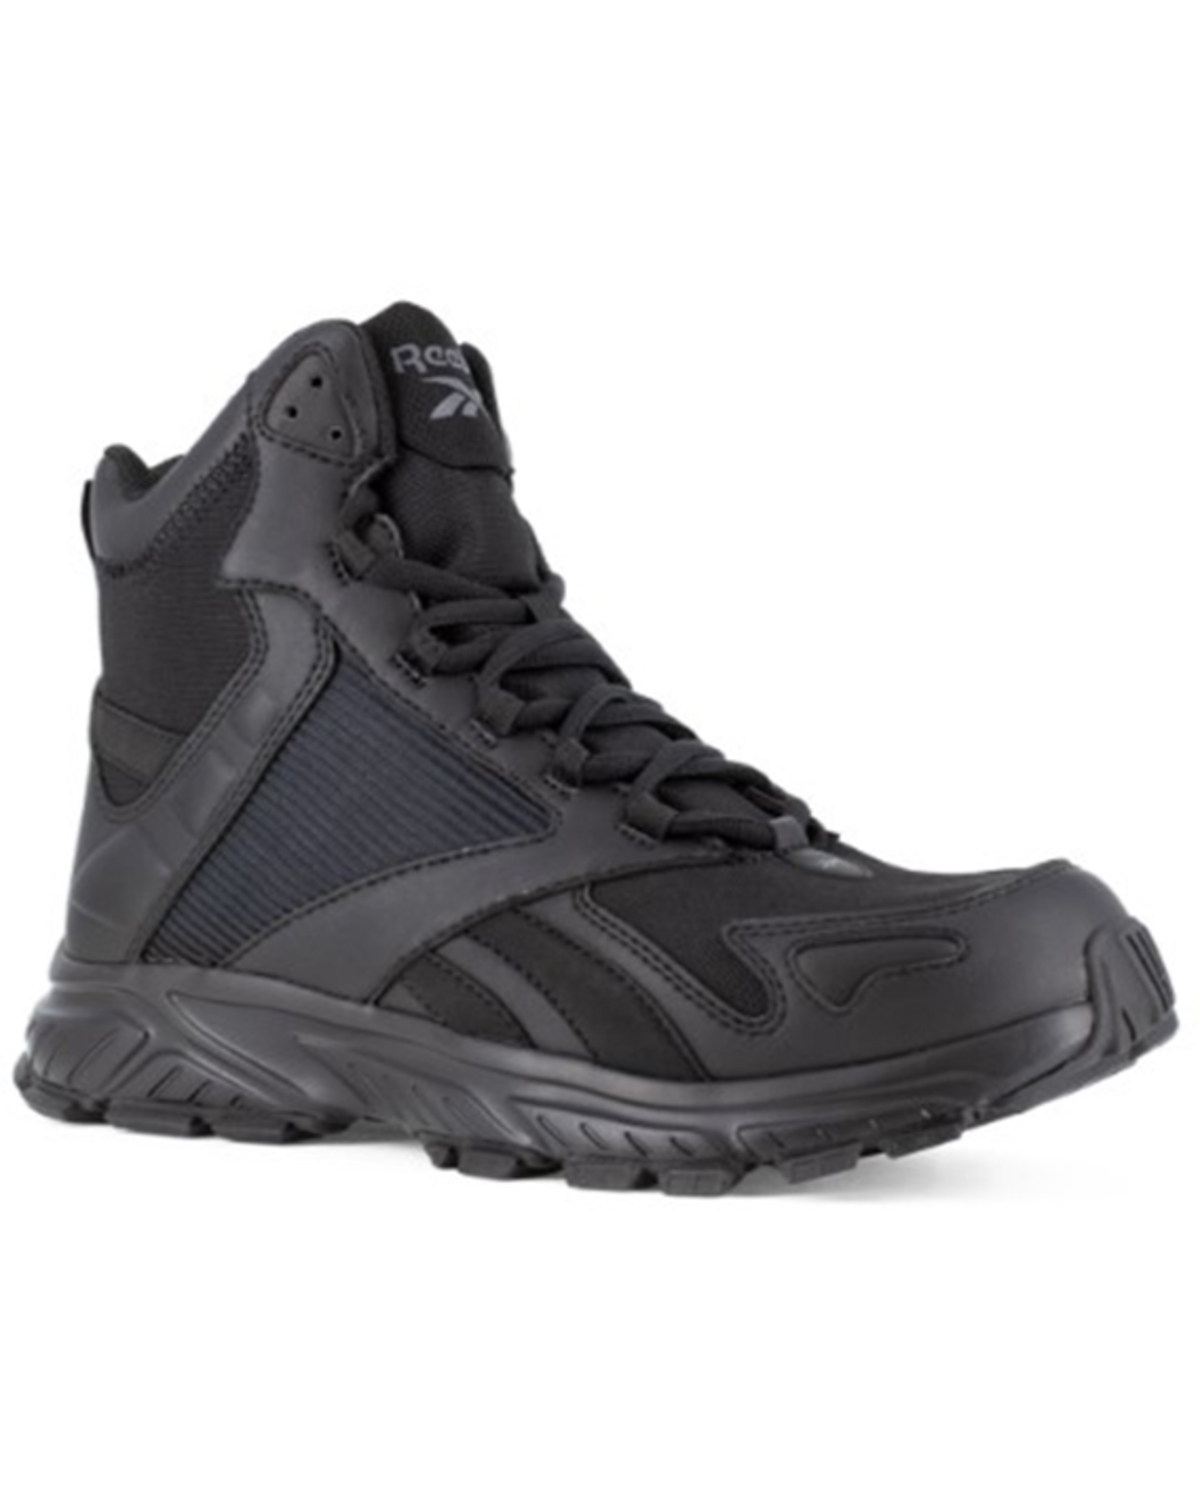 Reebok Men's 6" Hyperium Trail Running Tactical Boots - Soft Toe